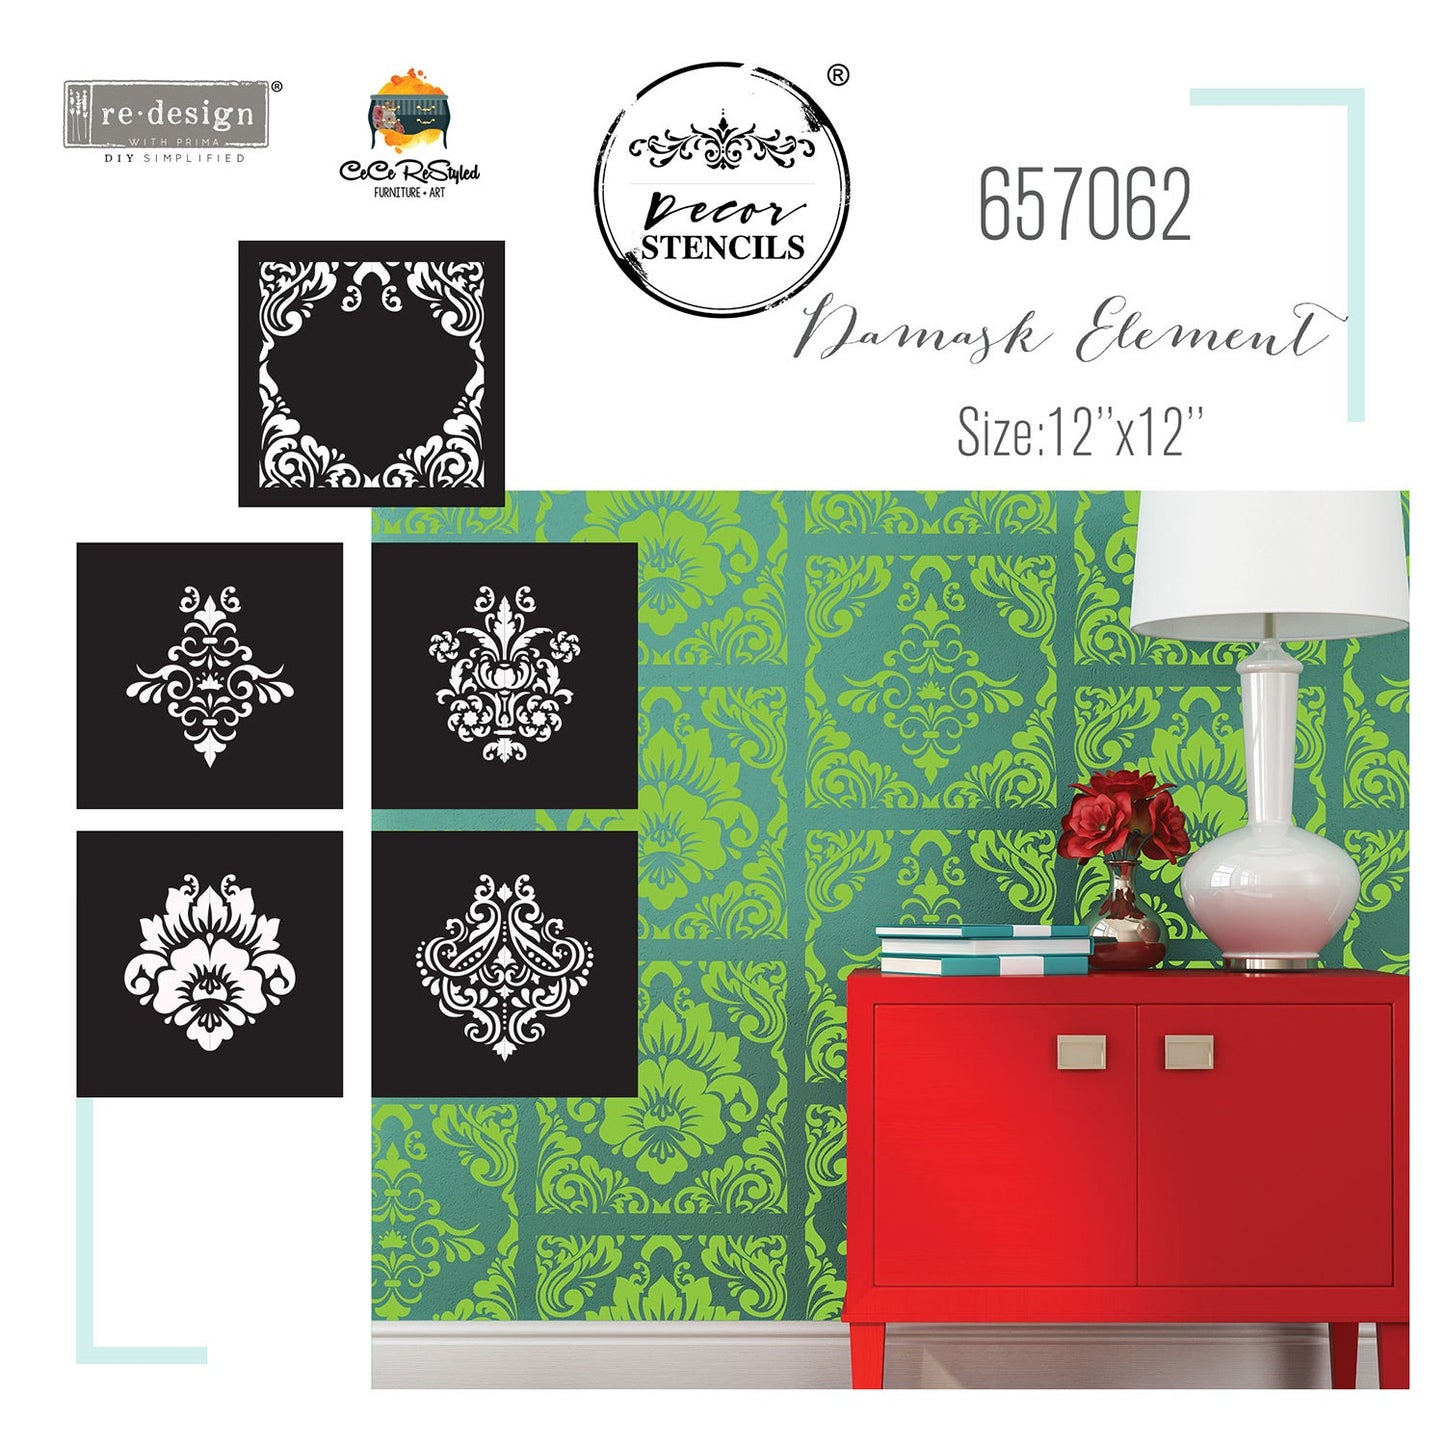 Re- Design with Prima  Stencils® Cece - Mix & Style - Damask Elements